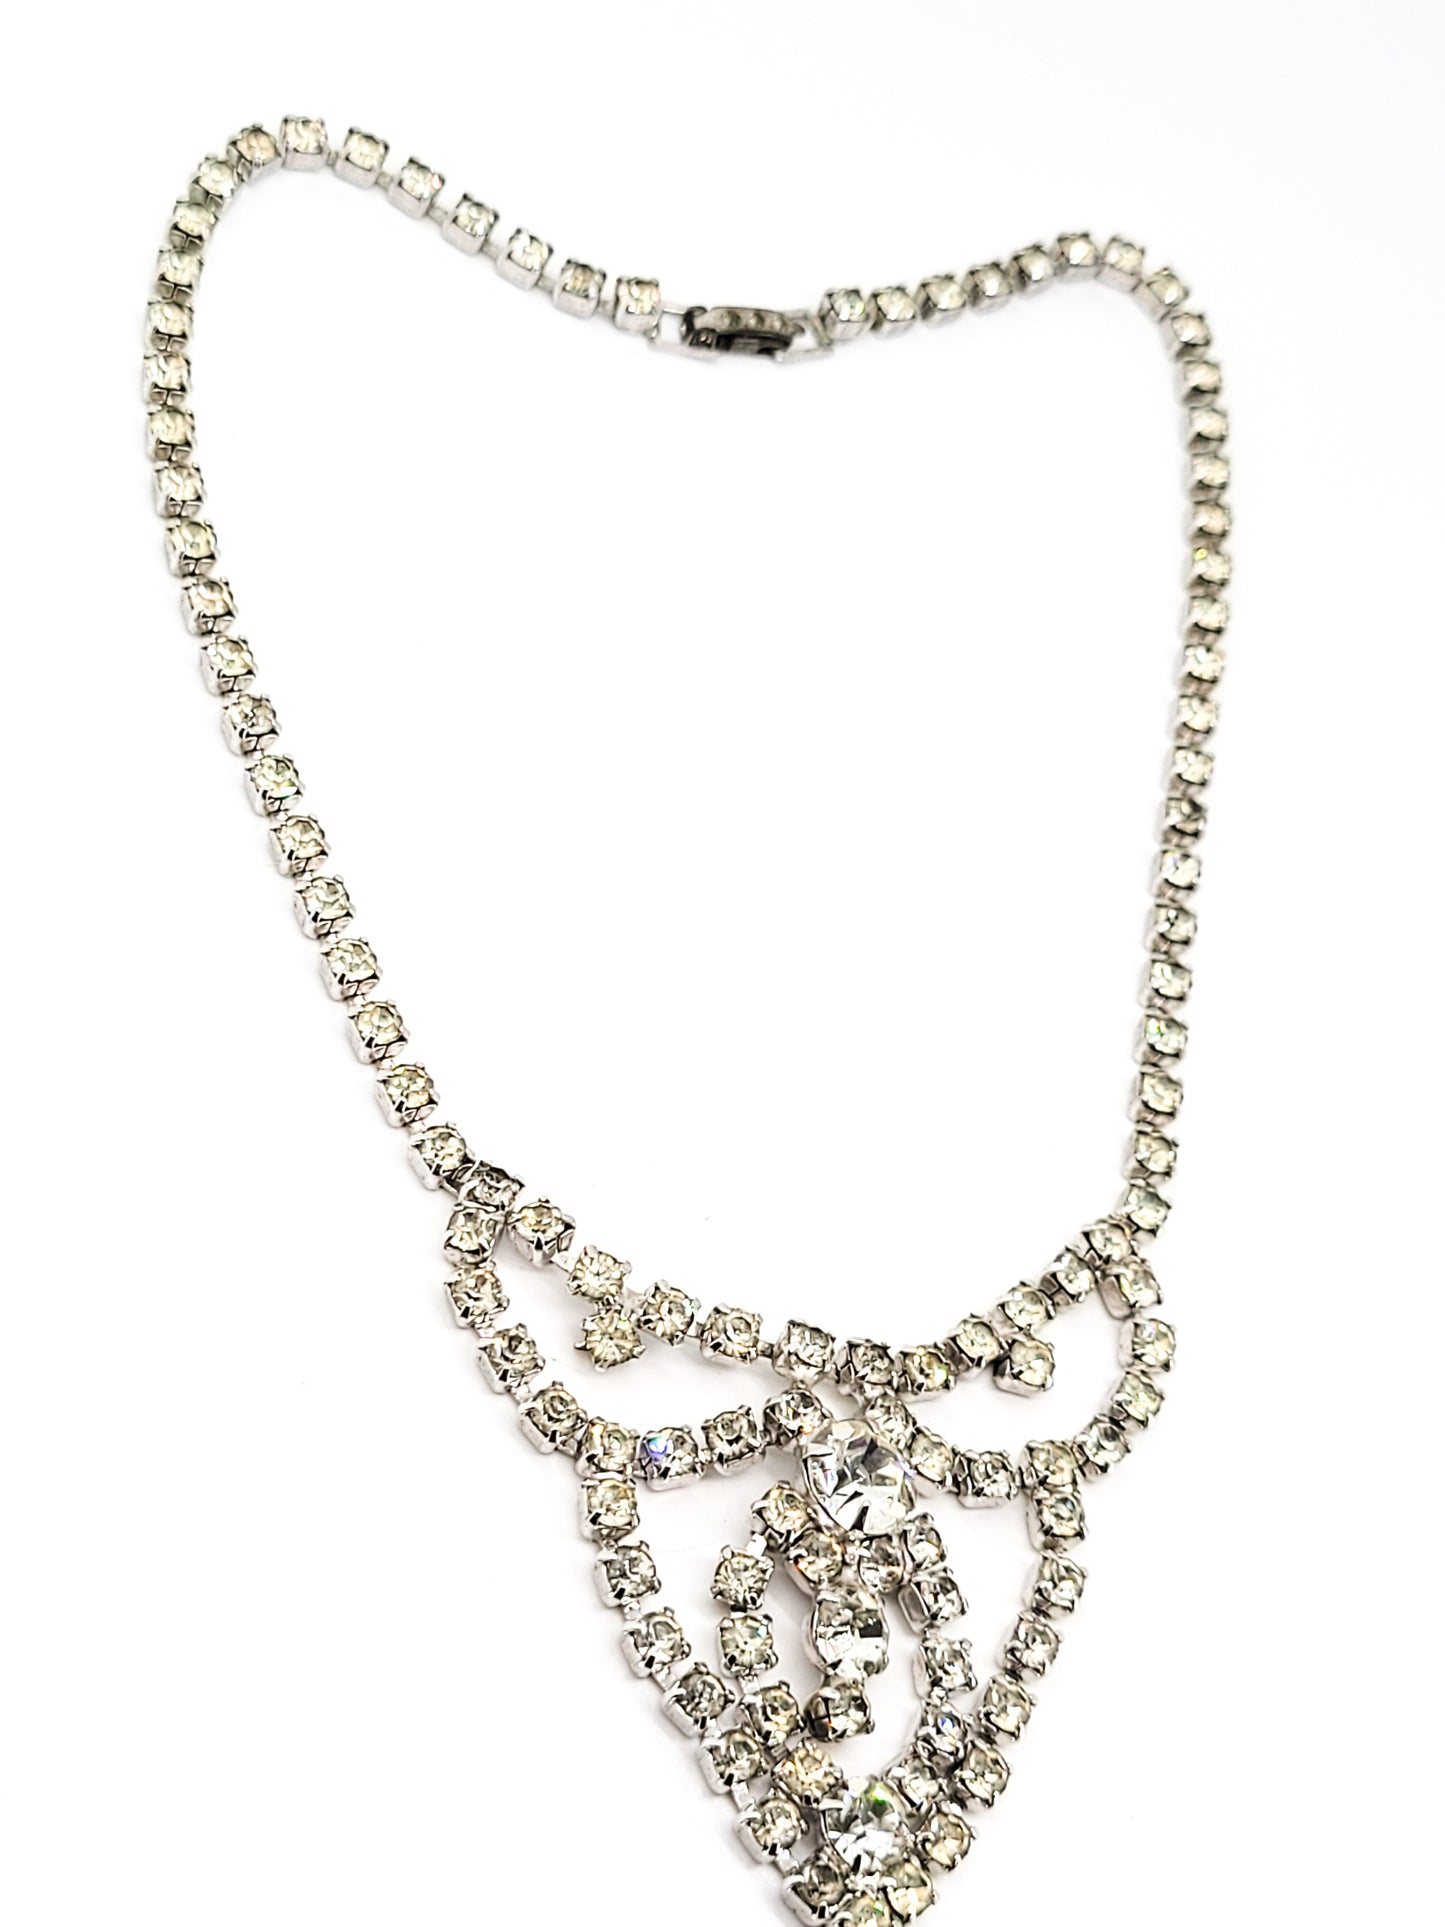 Large Scalloped clear rhinestone vintage bib choker necklace